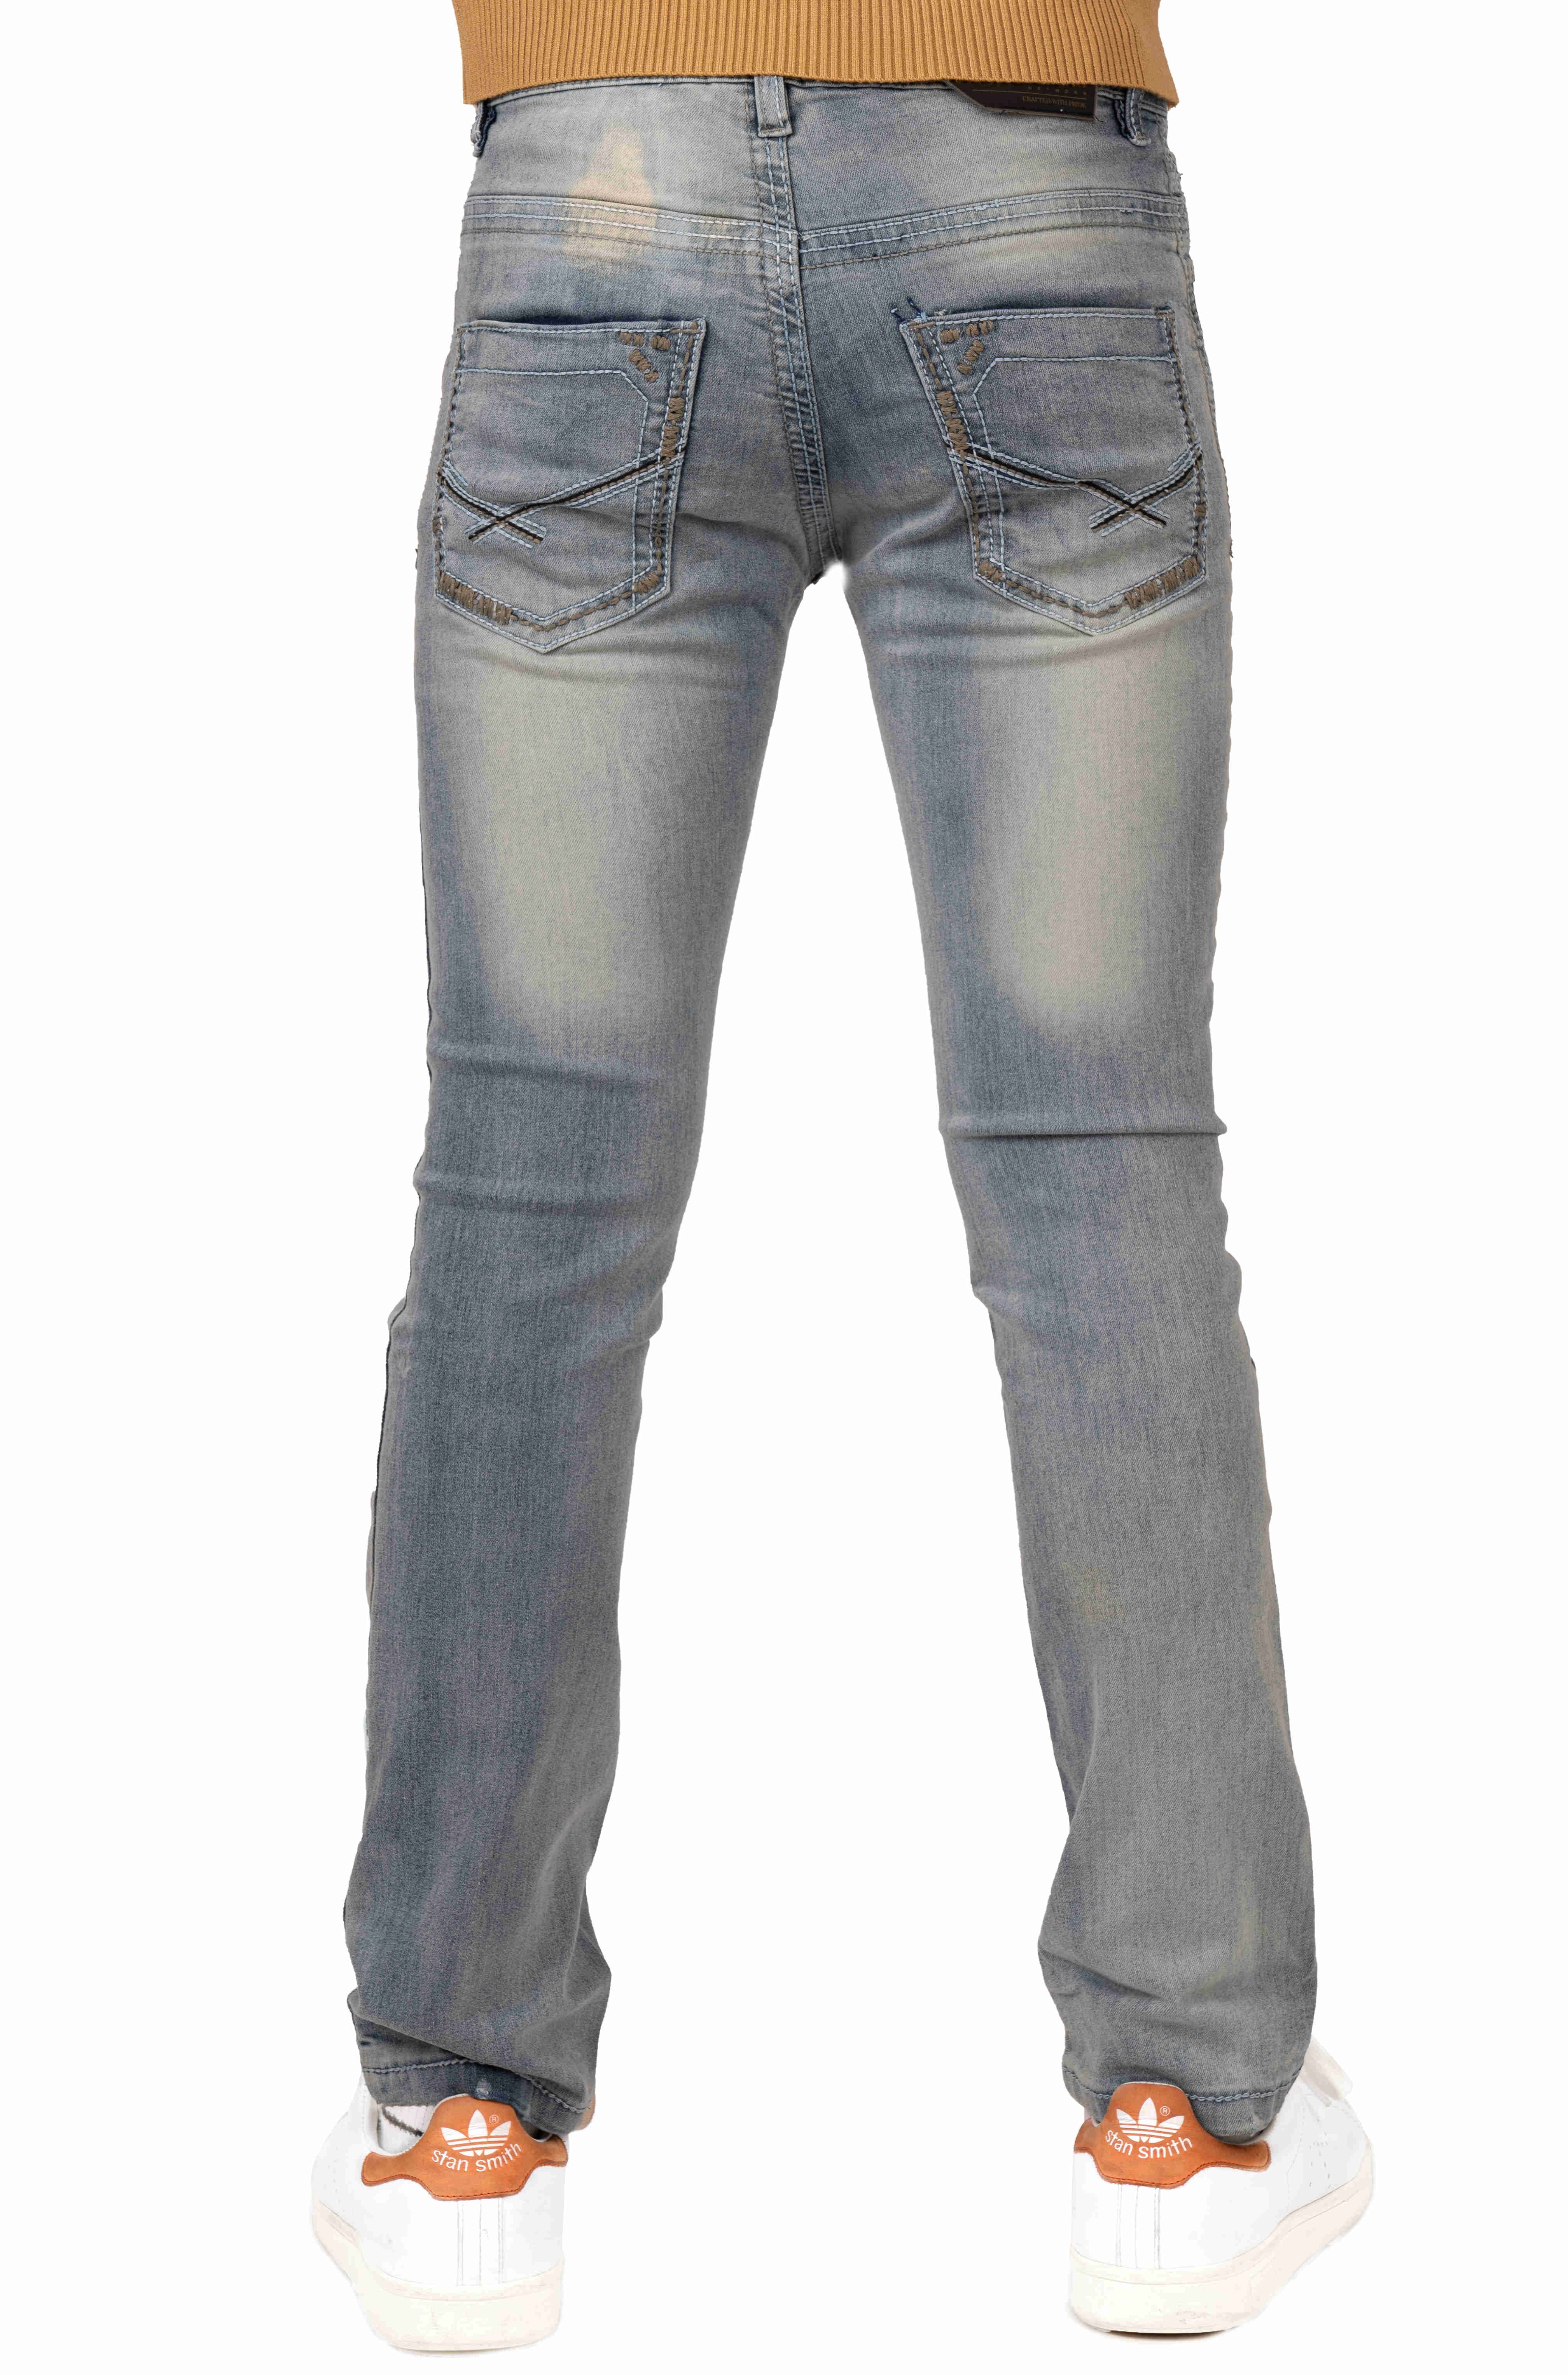 CULTURA Skinny Jeans for Little Boys Slim Wash Stretch Comfy Denim Pants,  Age 3-7, Blue Thick Stitch, Size 5